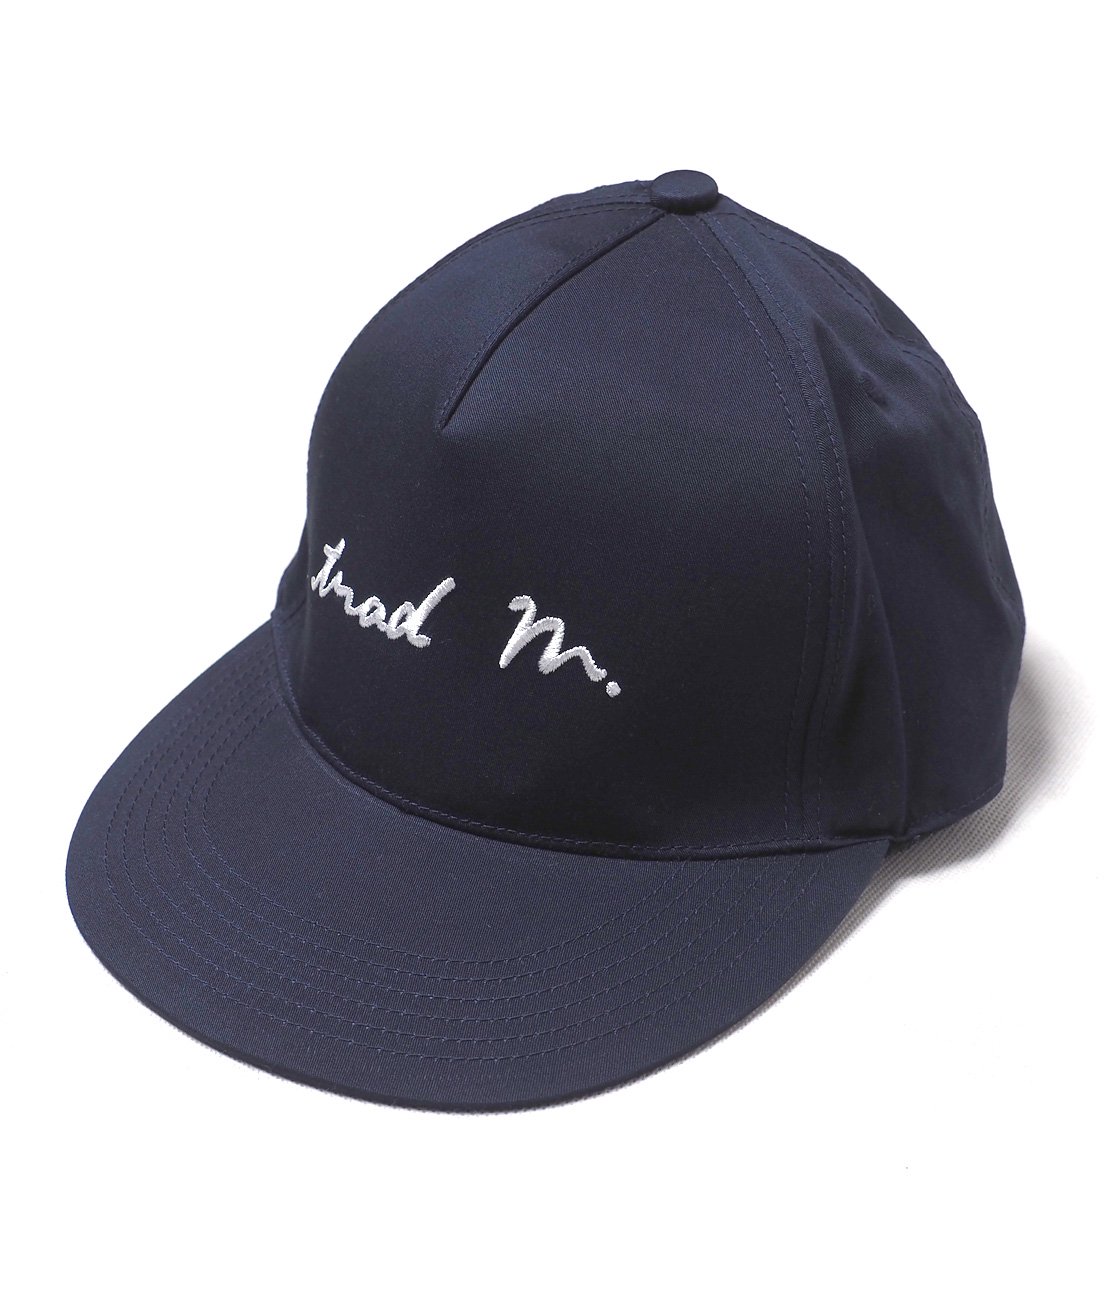 【TRAD MARKS】 "trad m." 5 PANEL CAP "NEW YORK" - NAVY キャップ 帽子 ロゴ - HUNKY